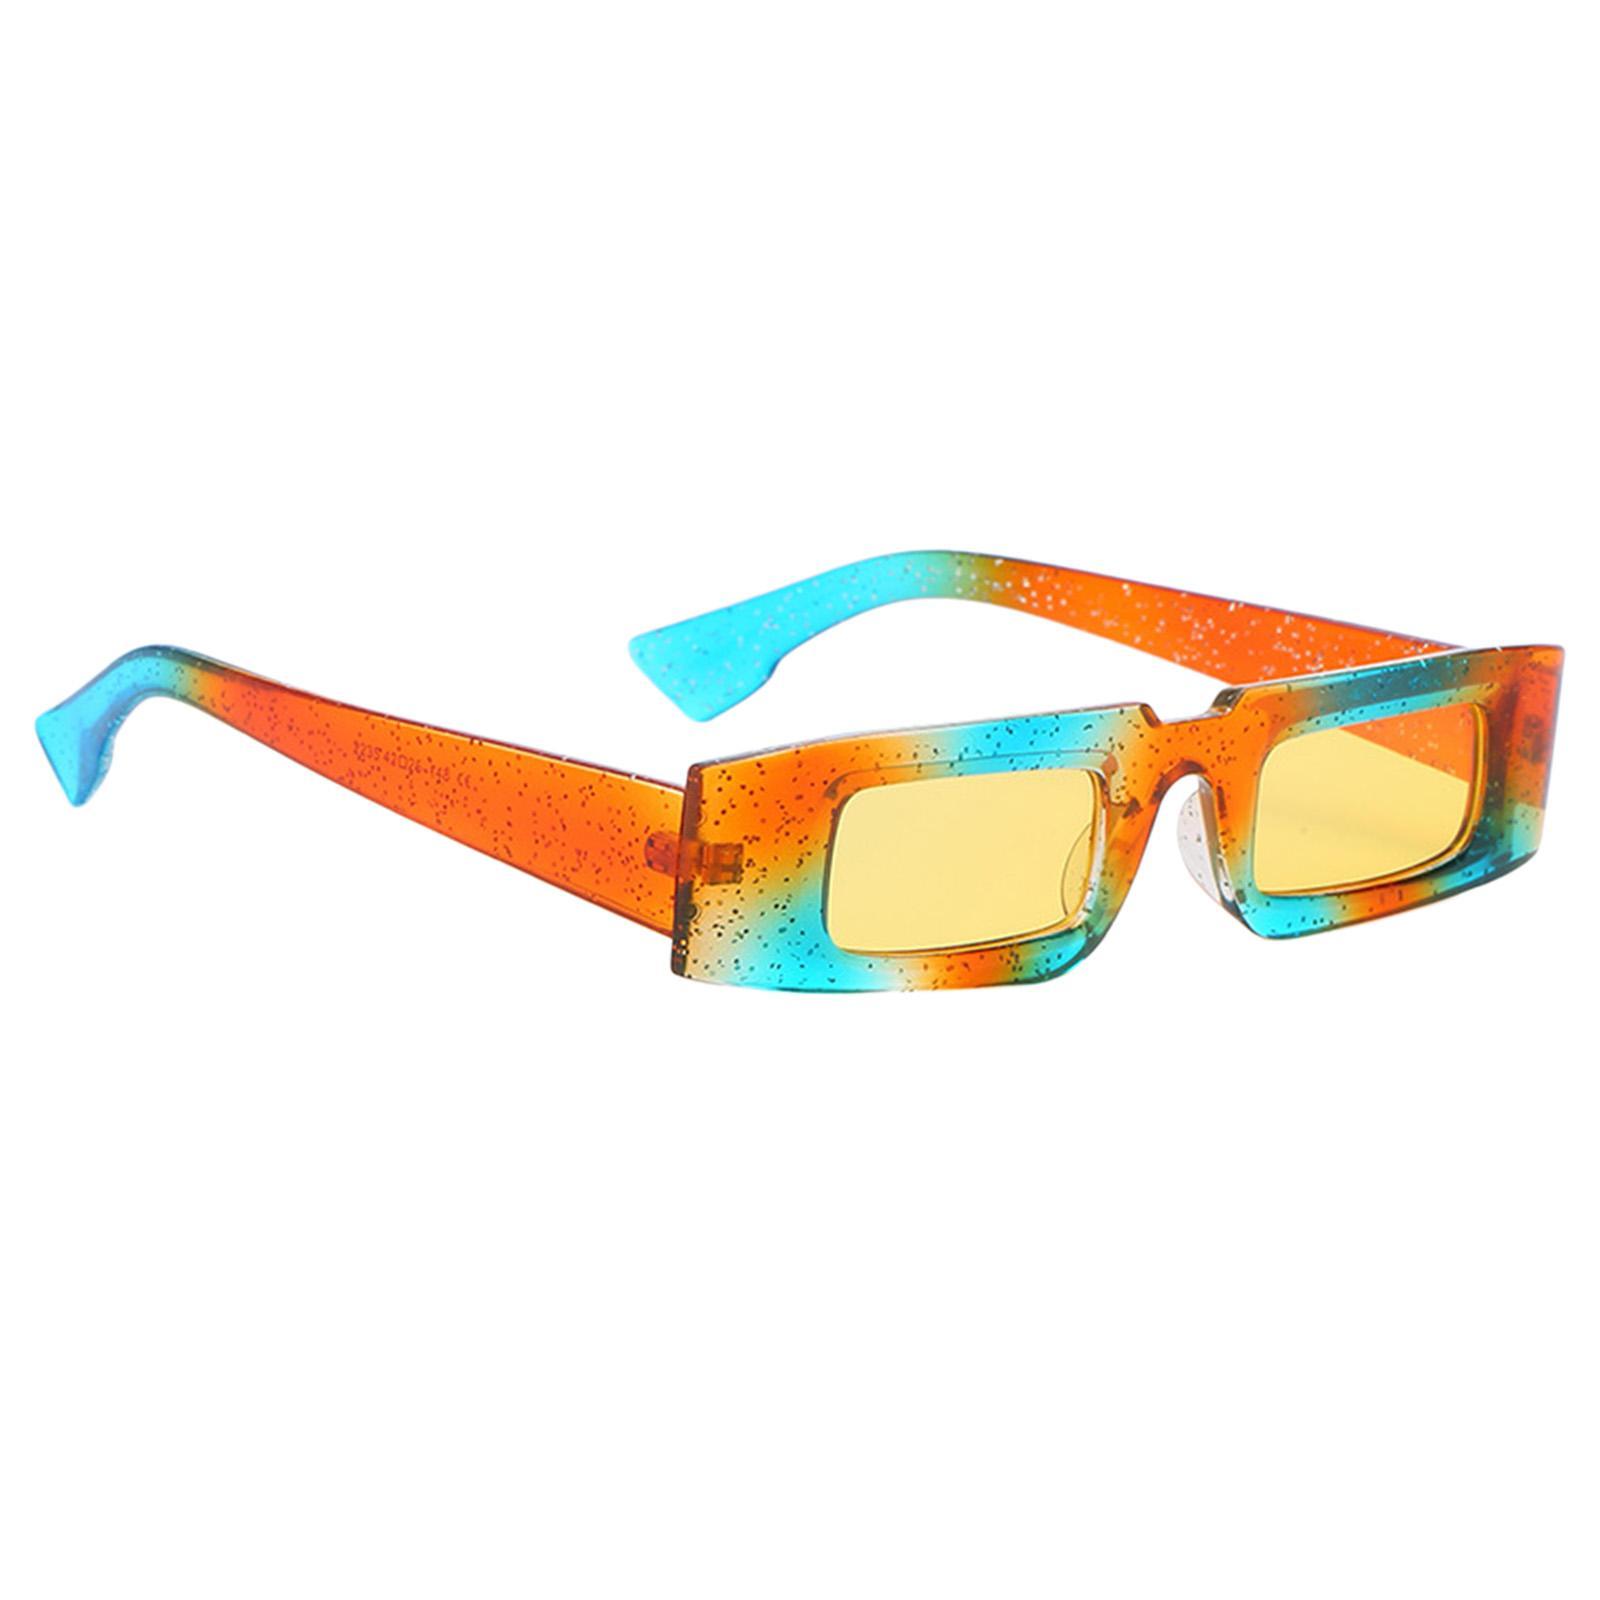 Retro Colorful Rectangle Sunglasses Flat Top Glasses Beach Running Eyewear